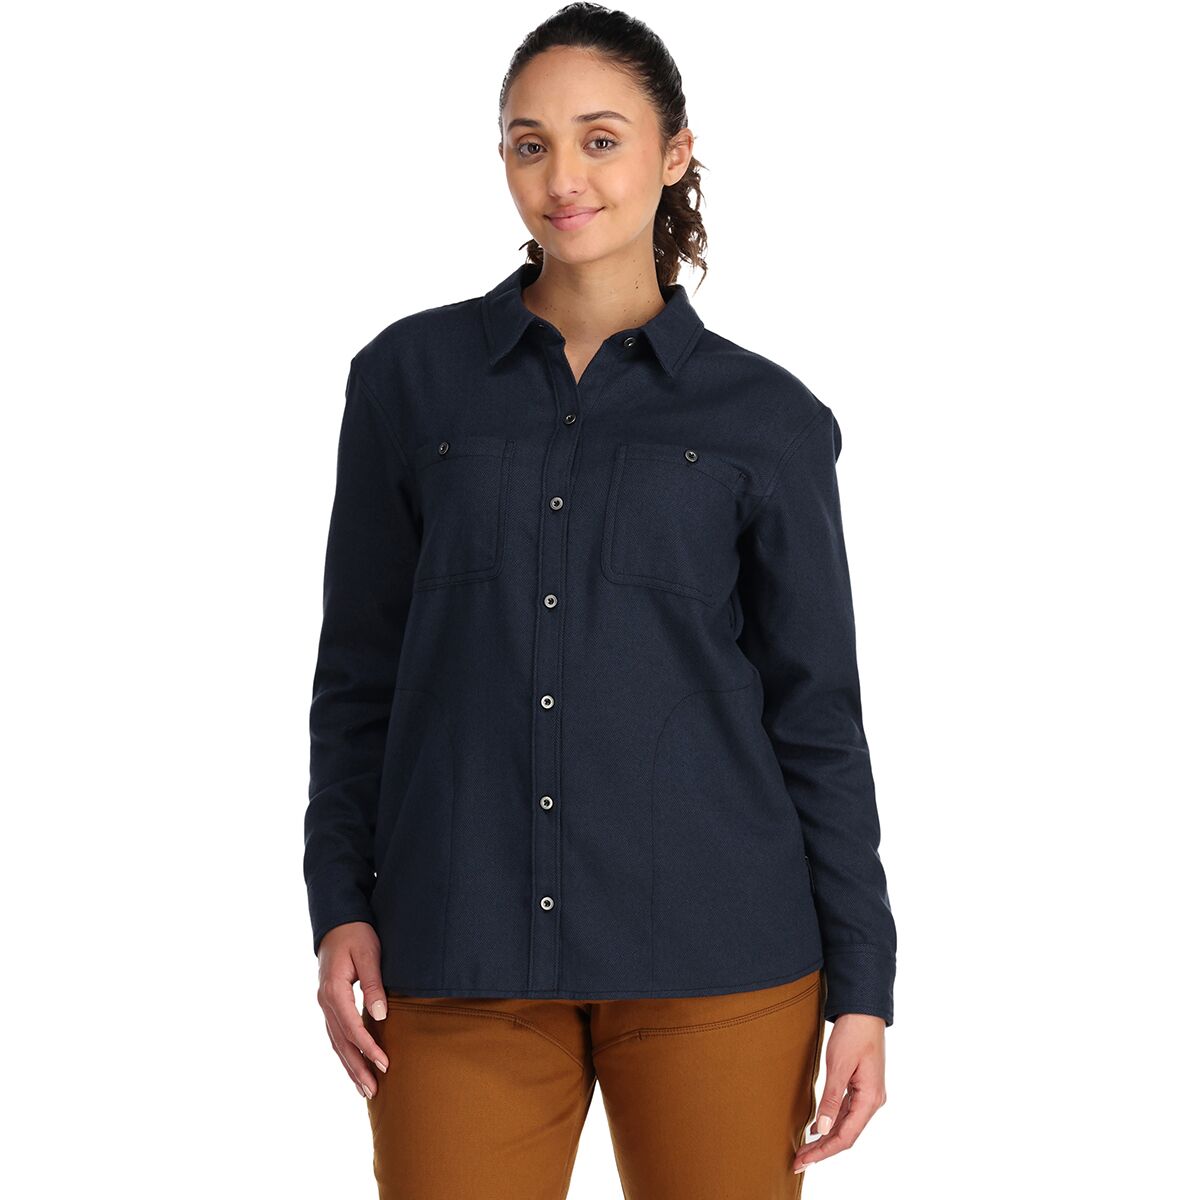 Outdoor Research Feedback Flannel Shirt - Women's